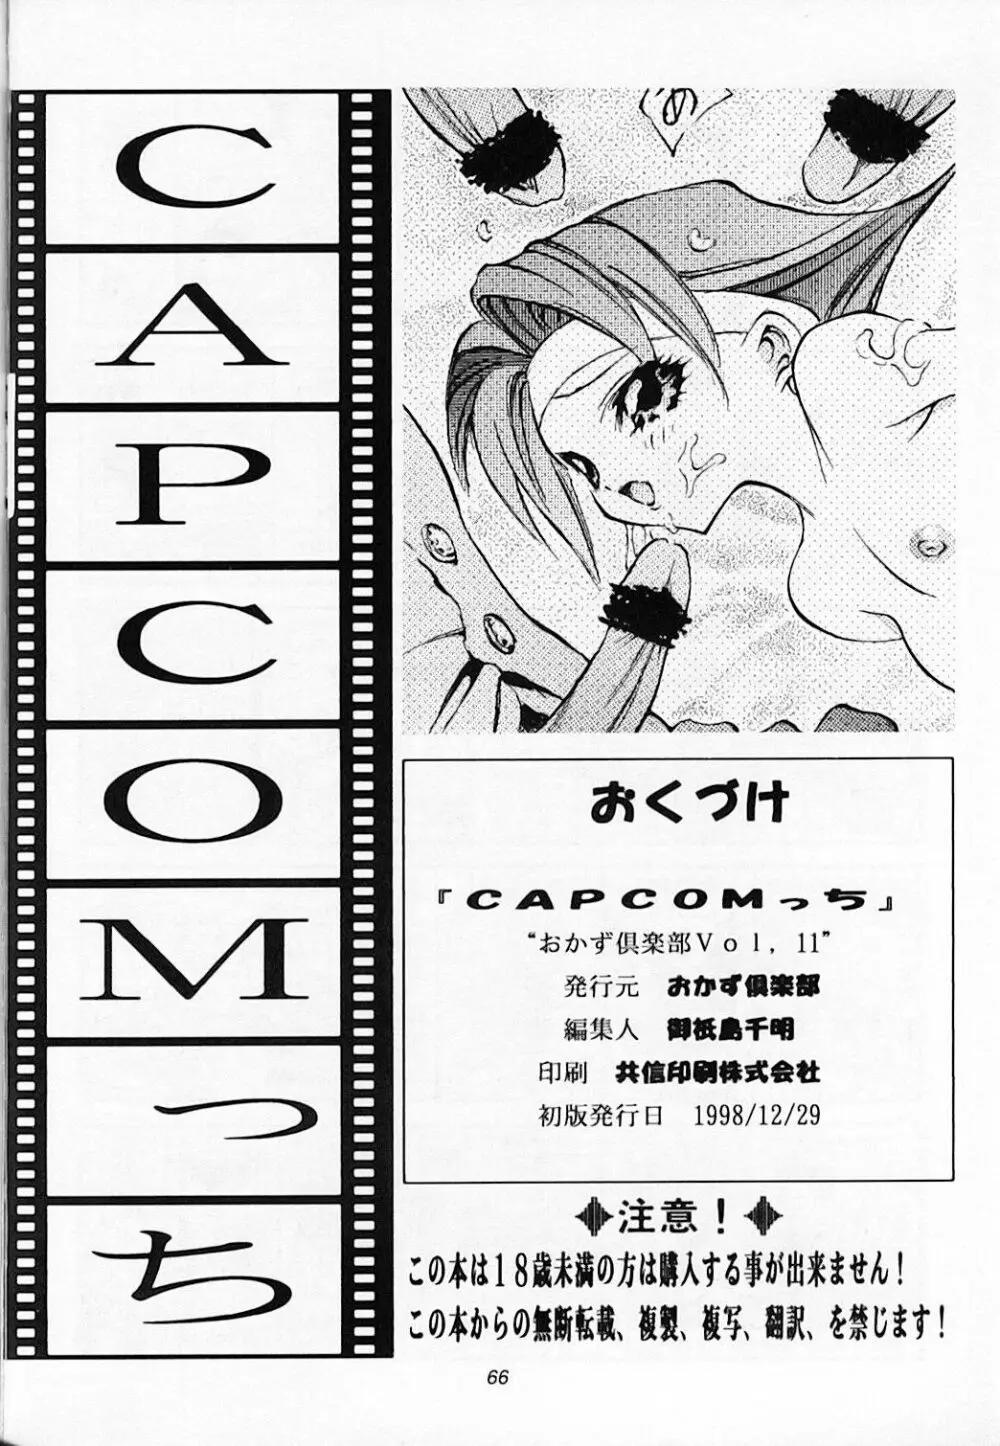 CAPCOMっち - page67